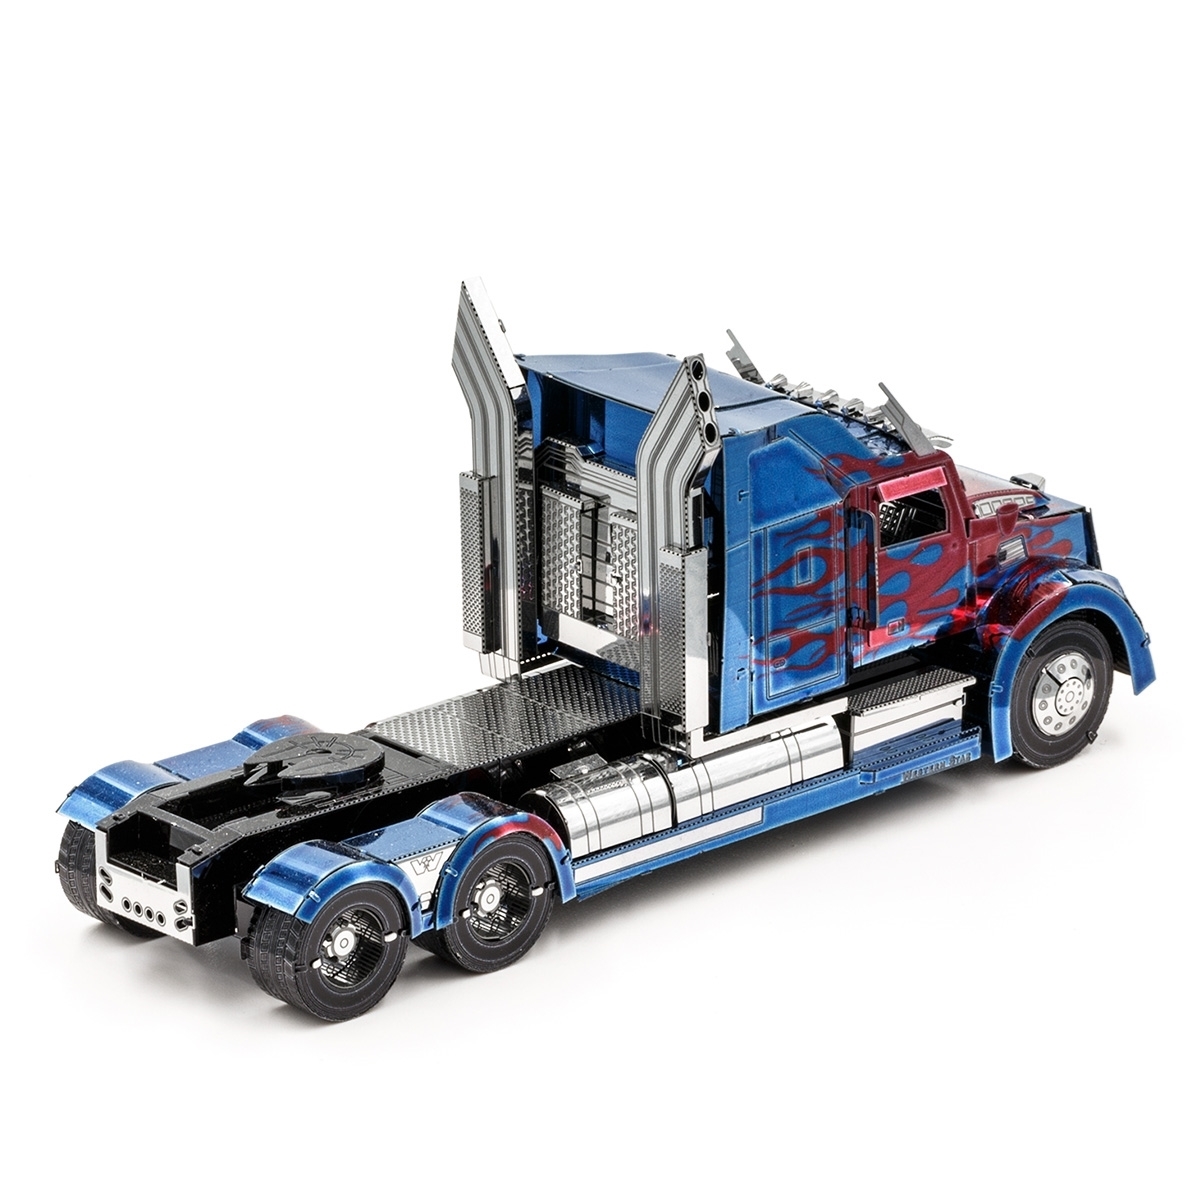 Грузовик трансформер. Тягач Western Star 5700 Optimus Prime. Трансформеры грузовик Оптимуса Прайма. Оптимус Прайм грузовик игрушка. Грузовик Мармон Оптимус Прайм.